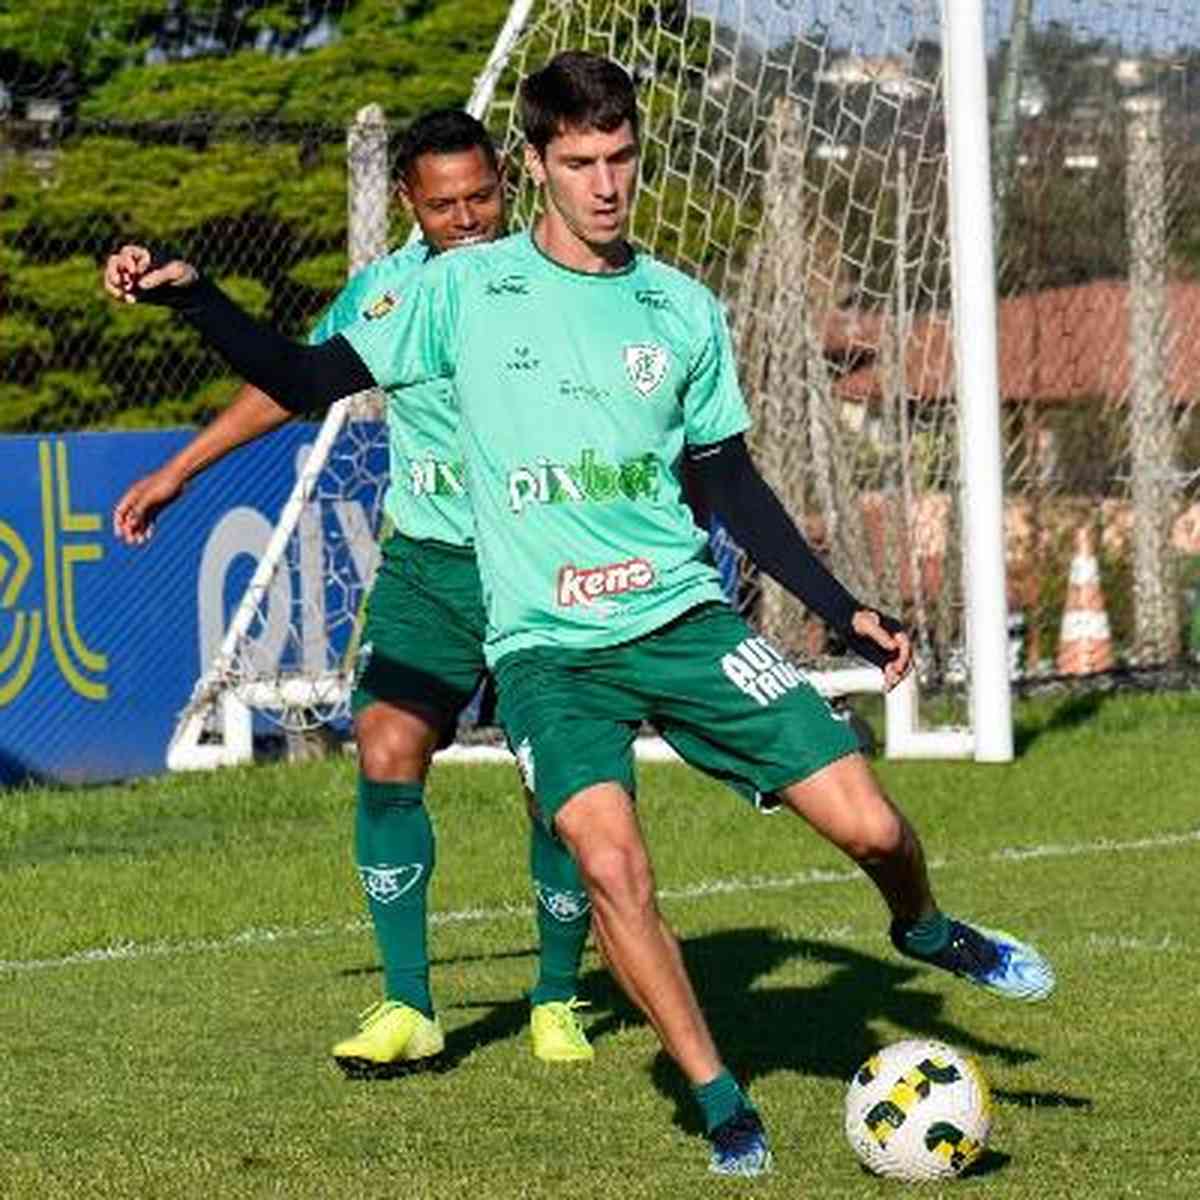 File:Diego Porfírio - Brasileirão Série A- Bragantino 4 x 2